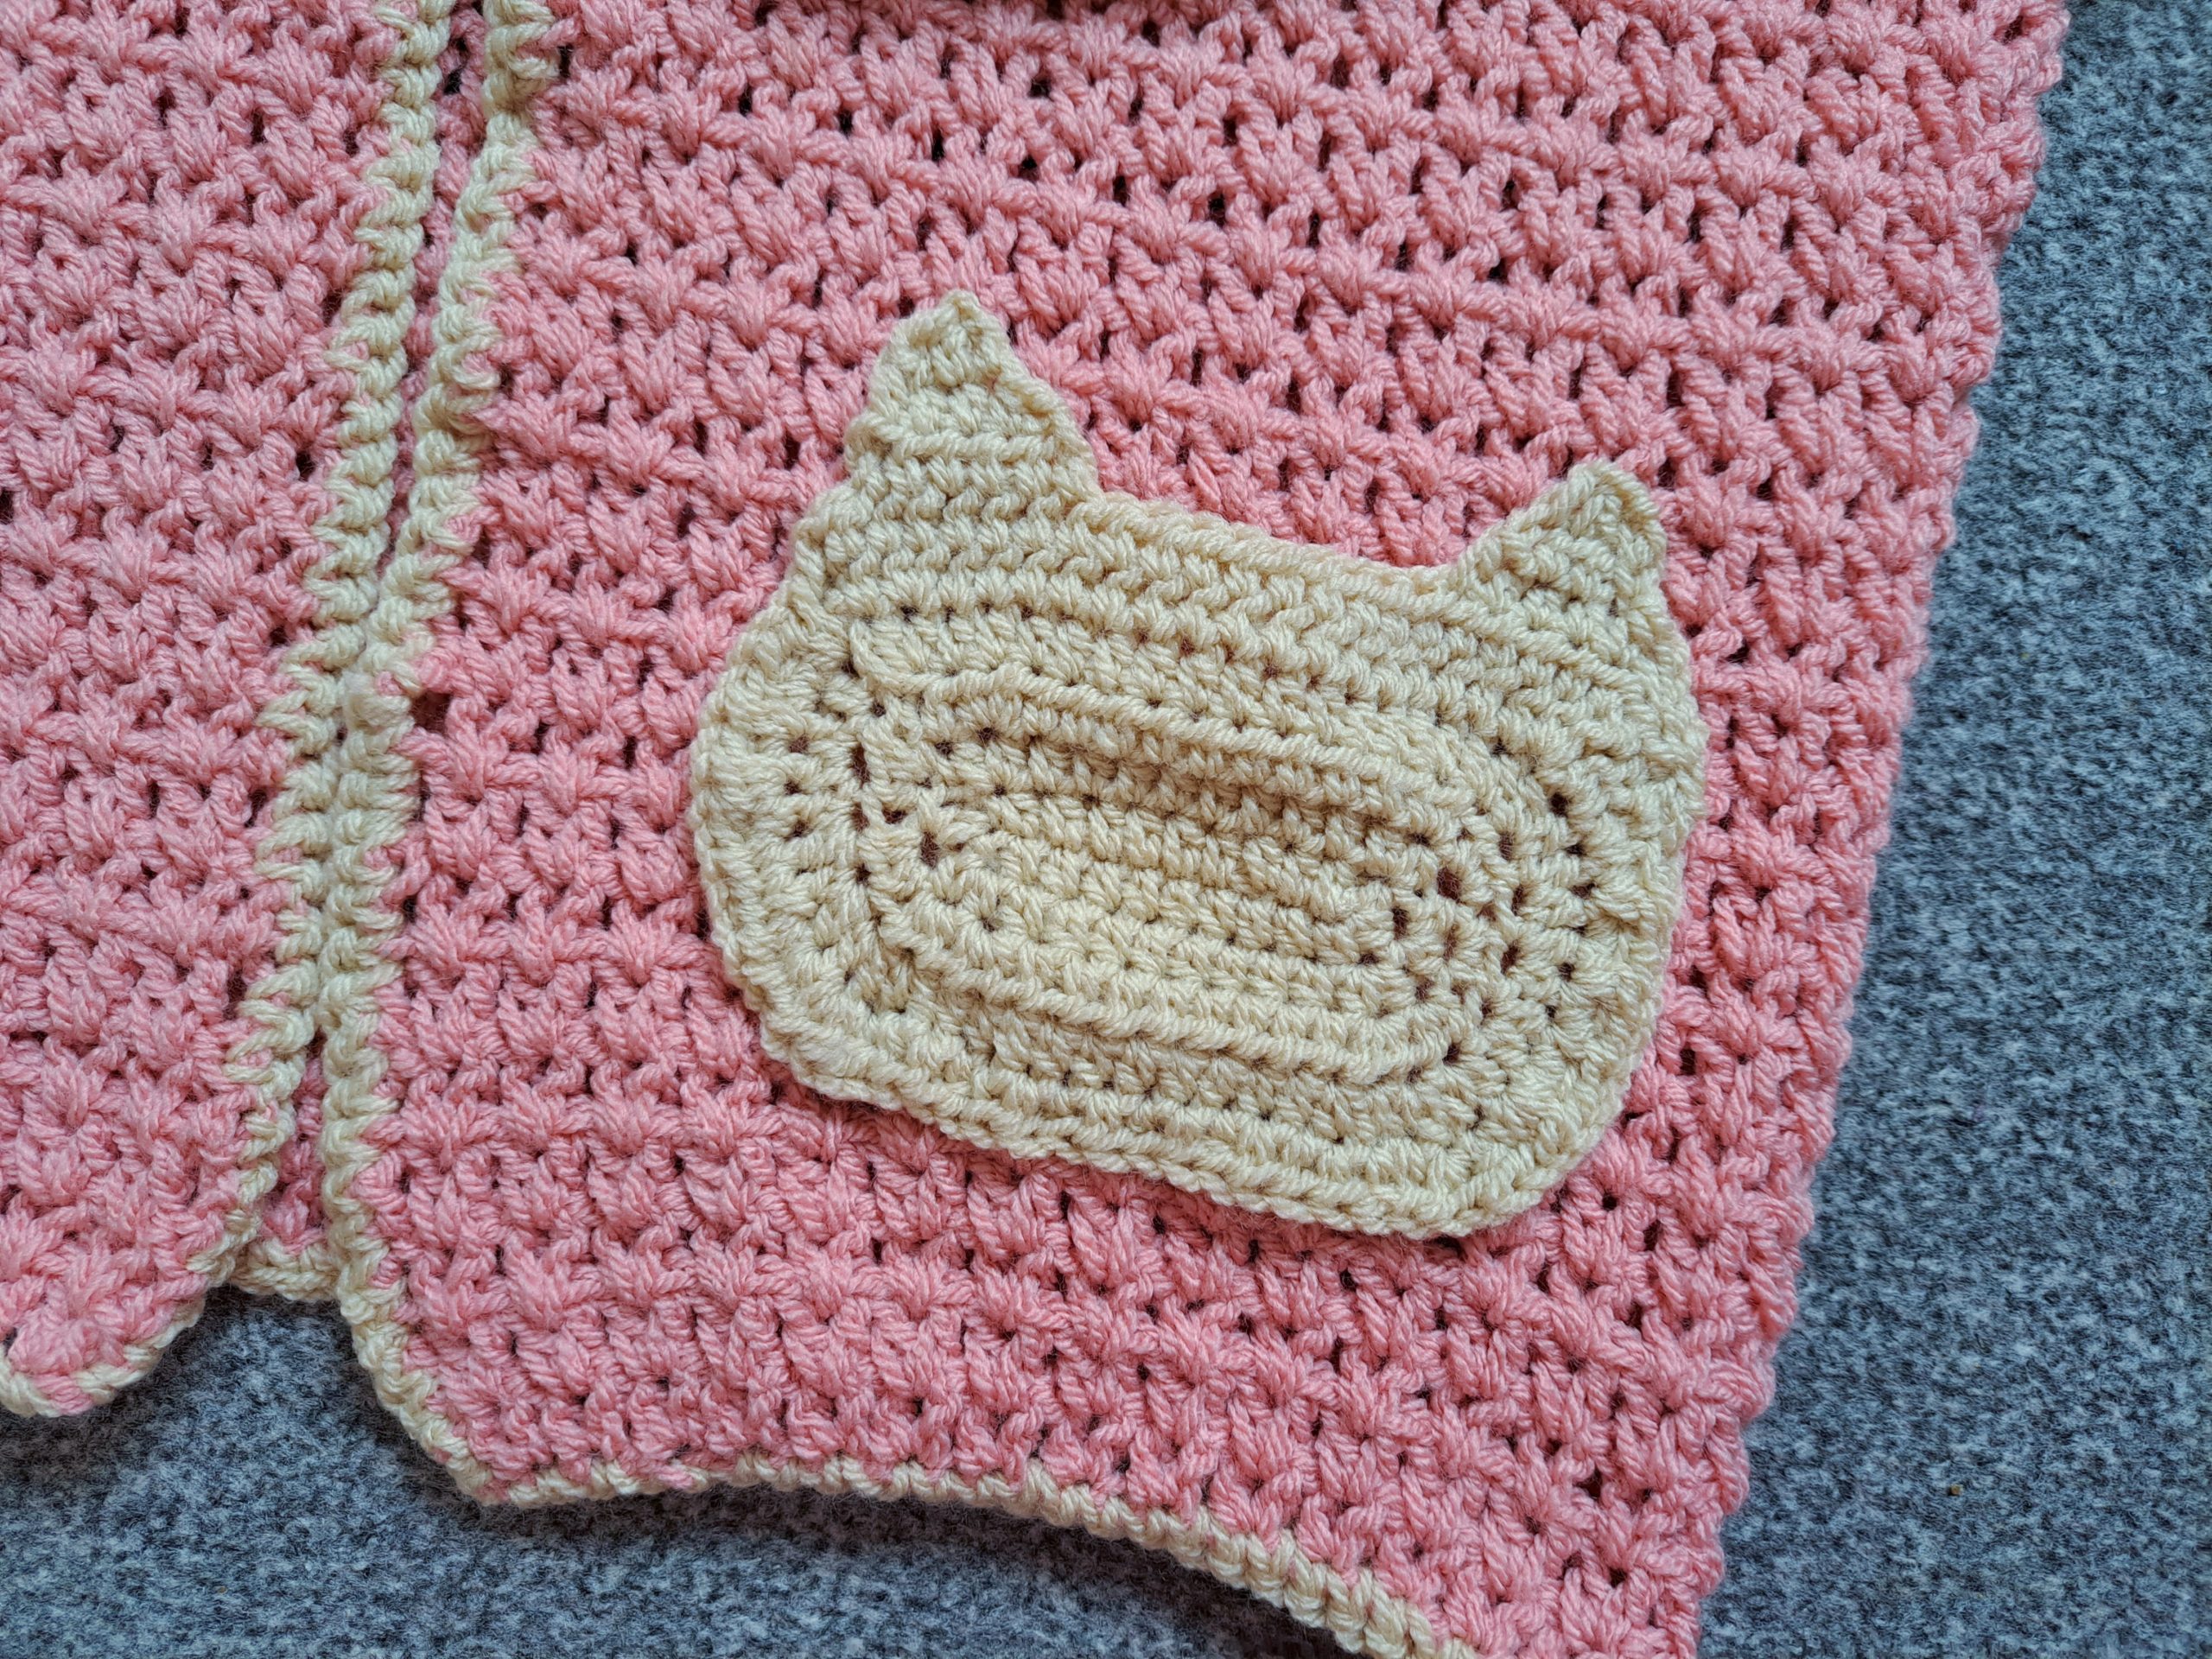 Crochet The Kitty Cat Cardigan Free Pattern